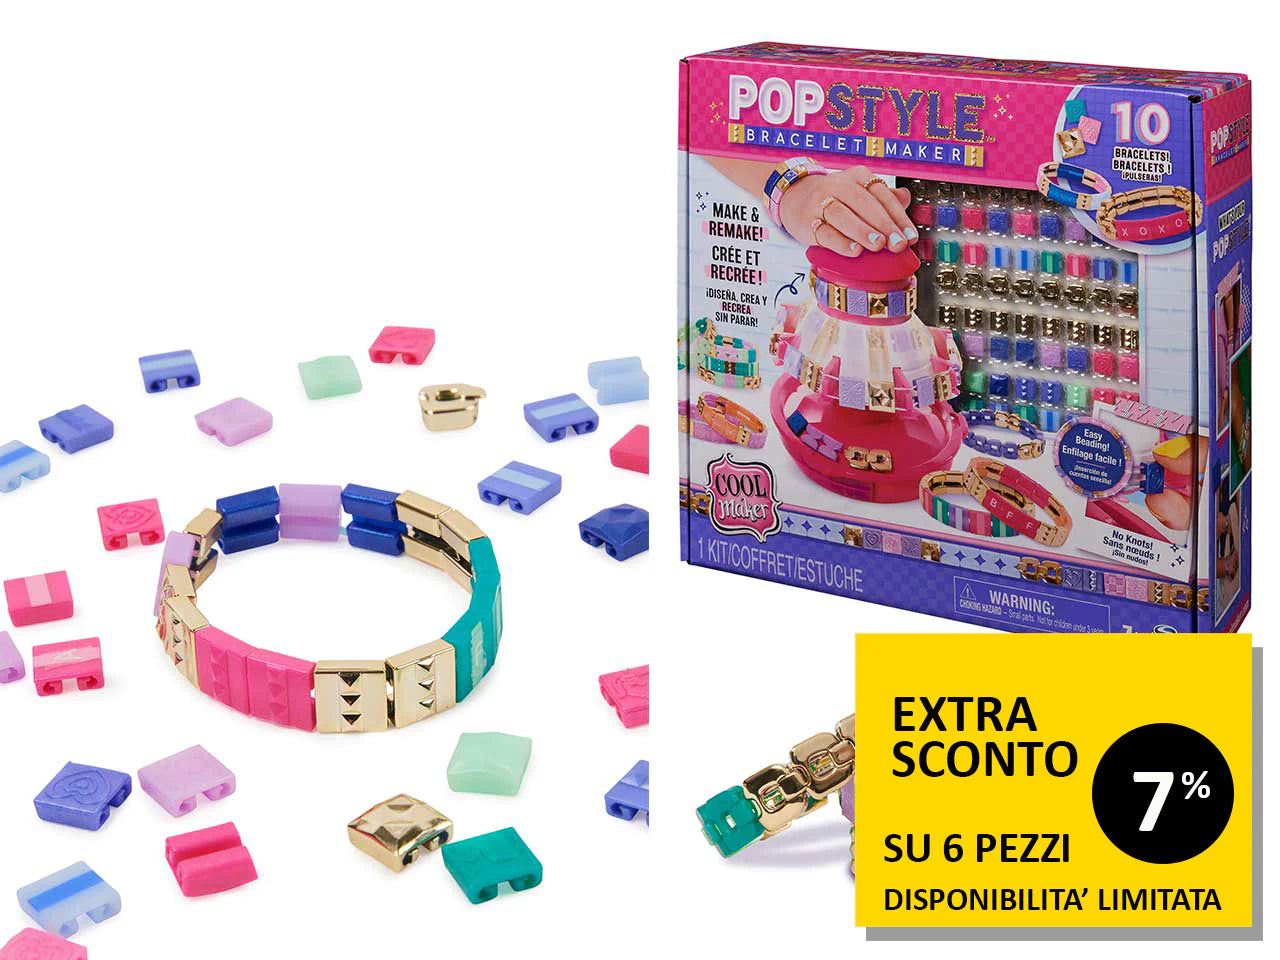 Cool Maker Pop Style Bracelet Maker - Toyworld Warrnambool